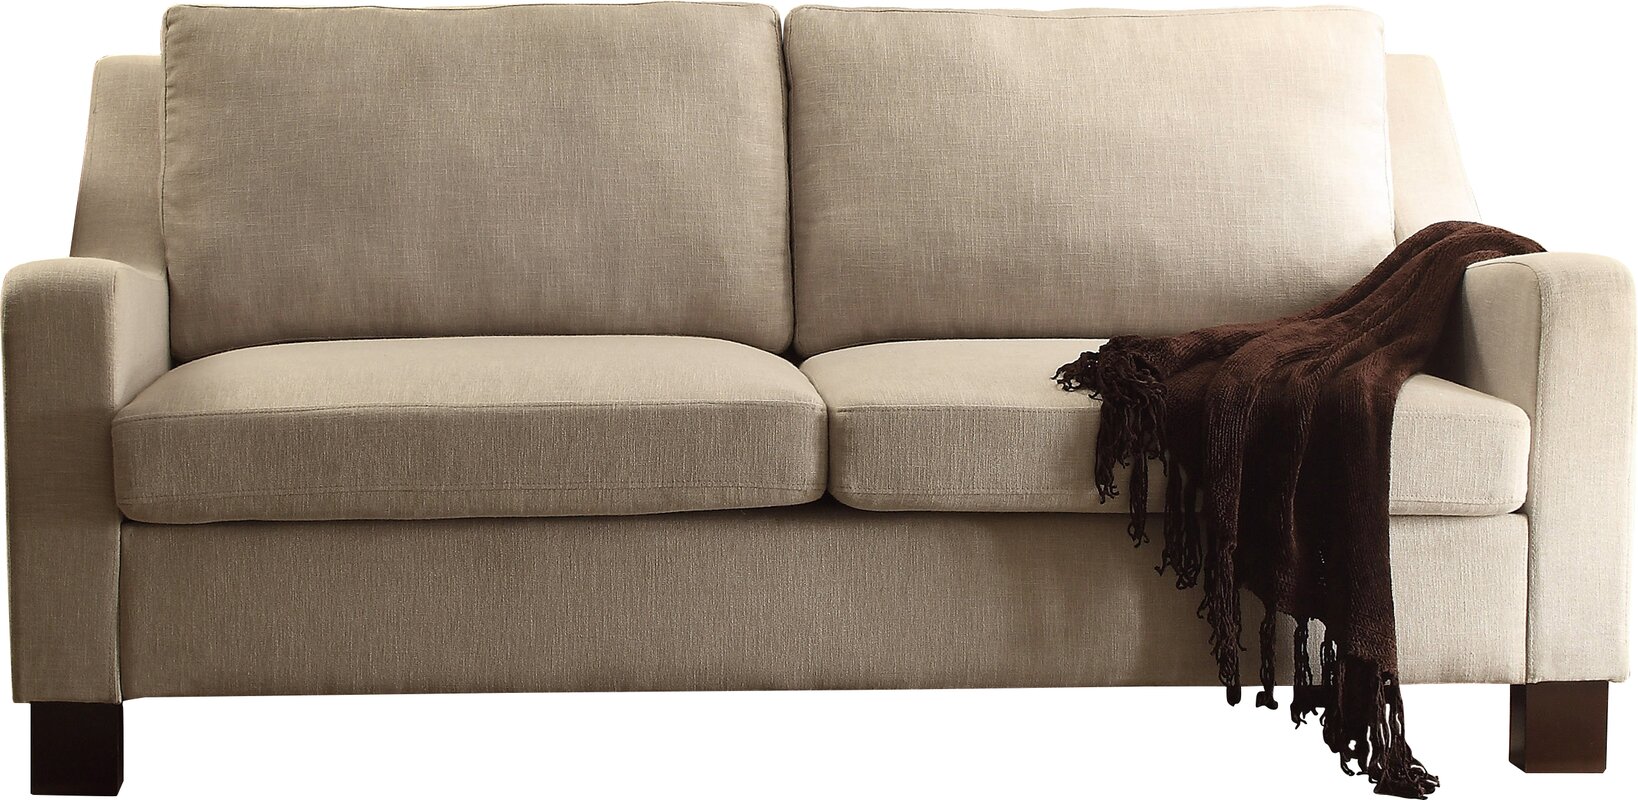 reynolds leather sofa reviews